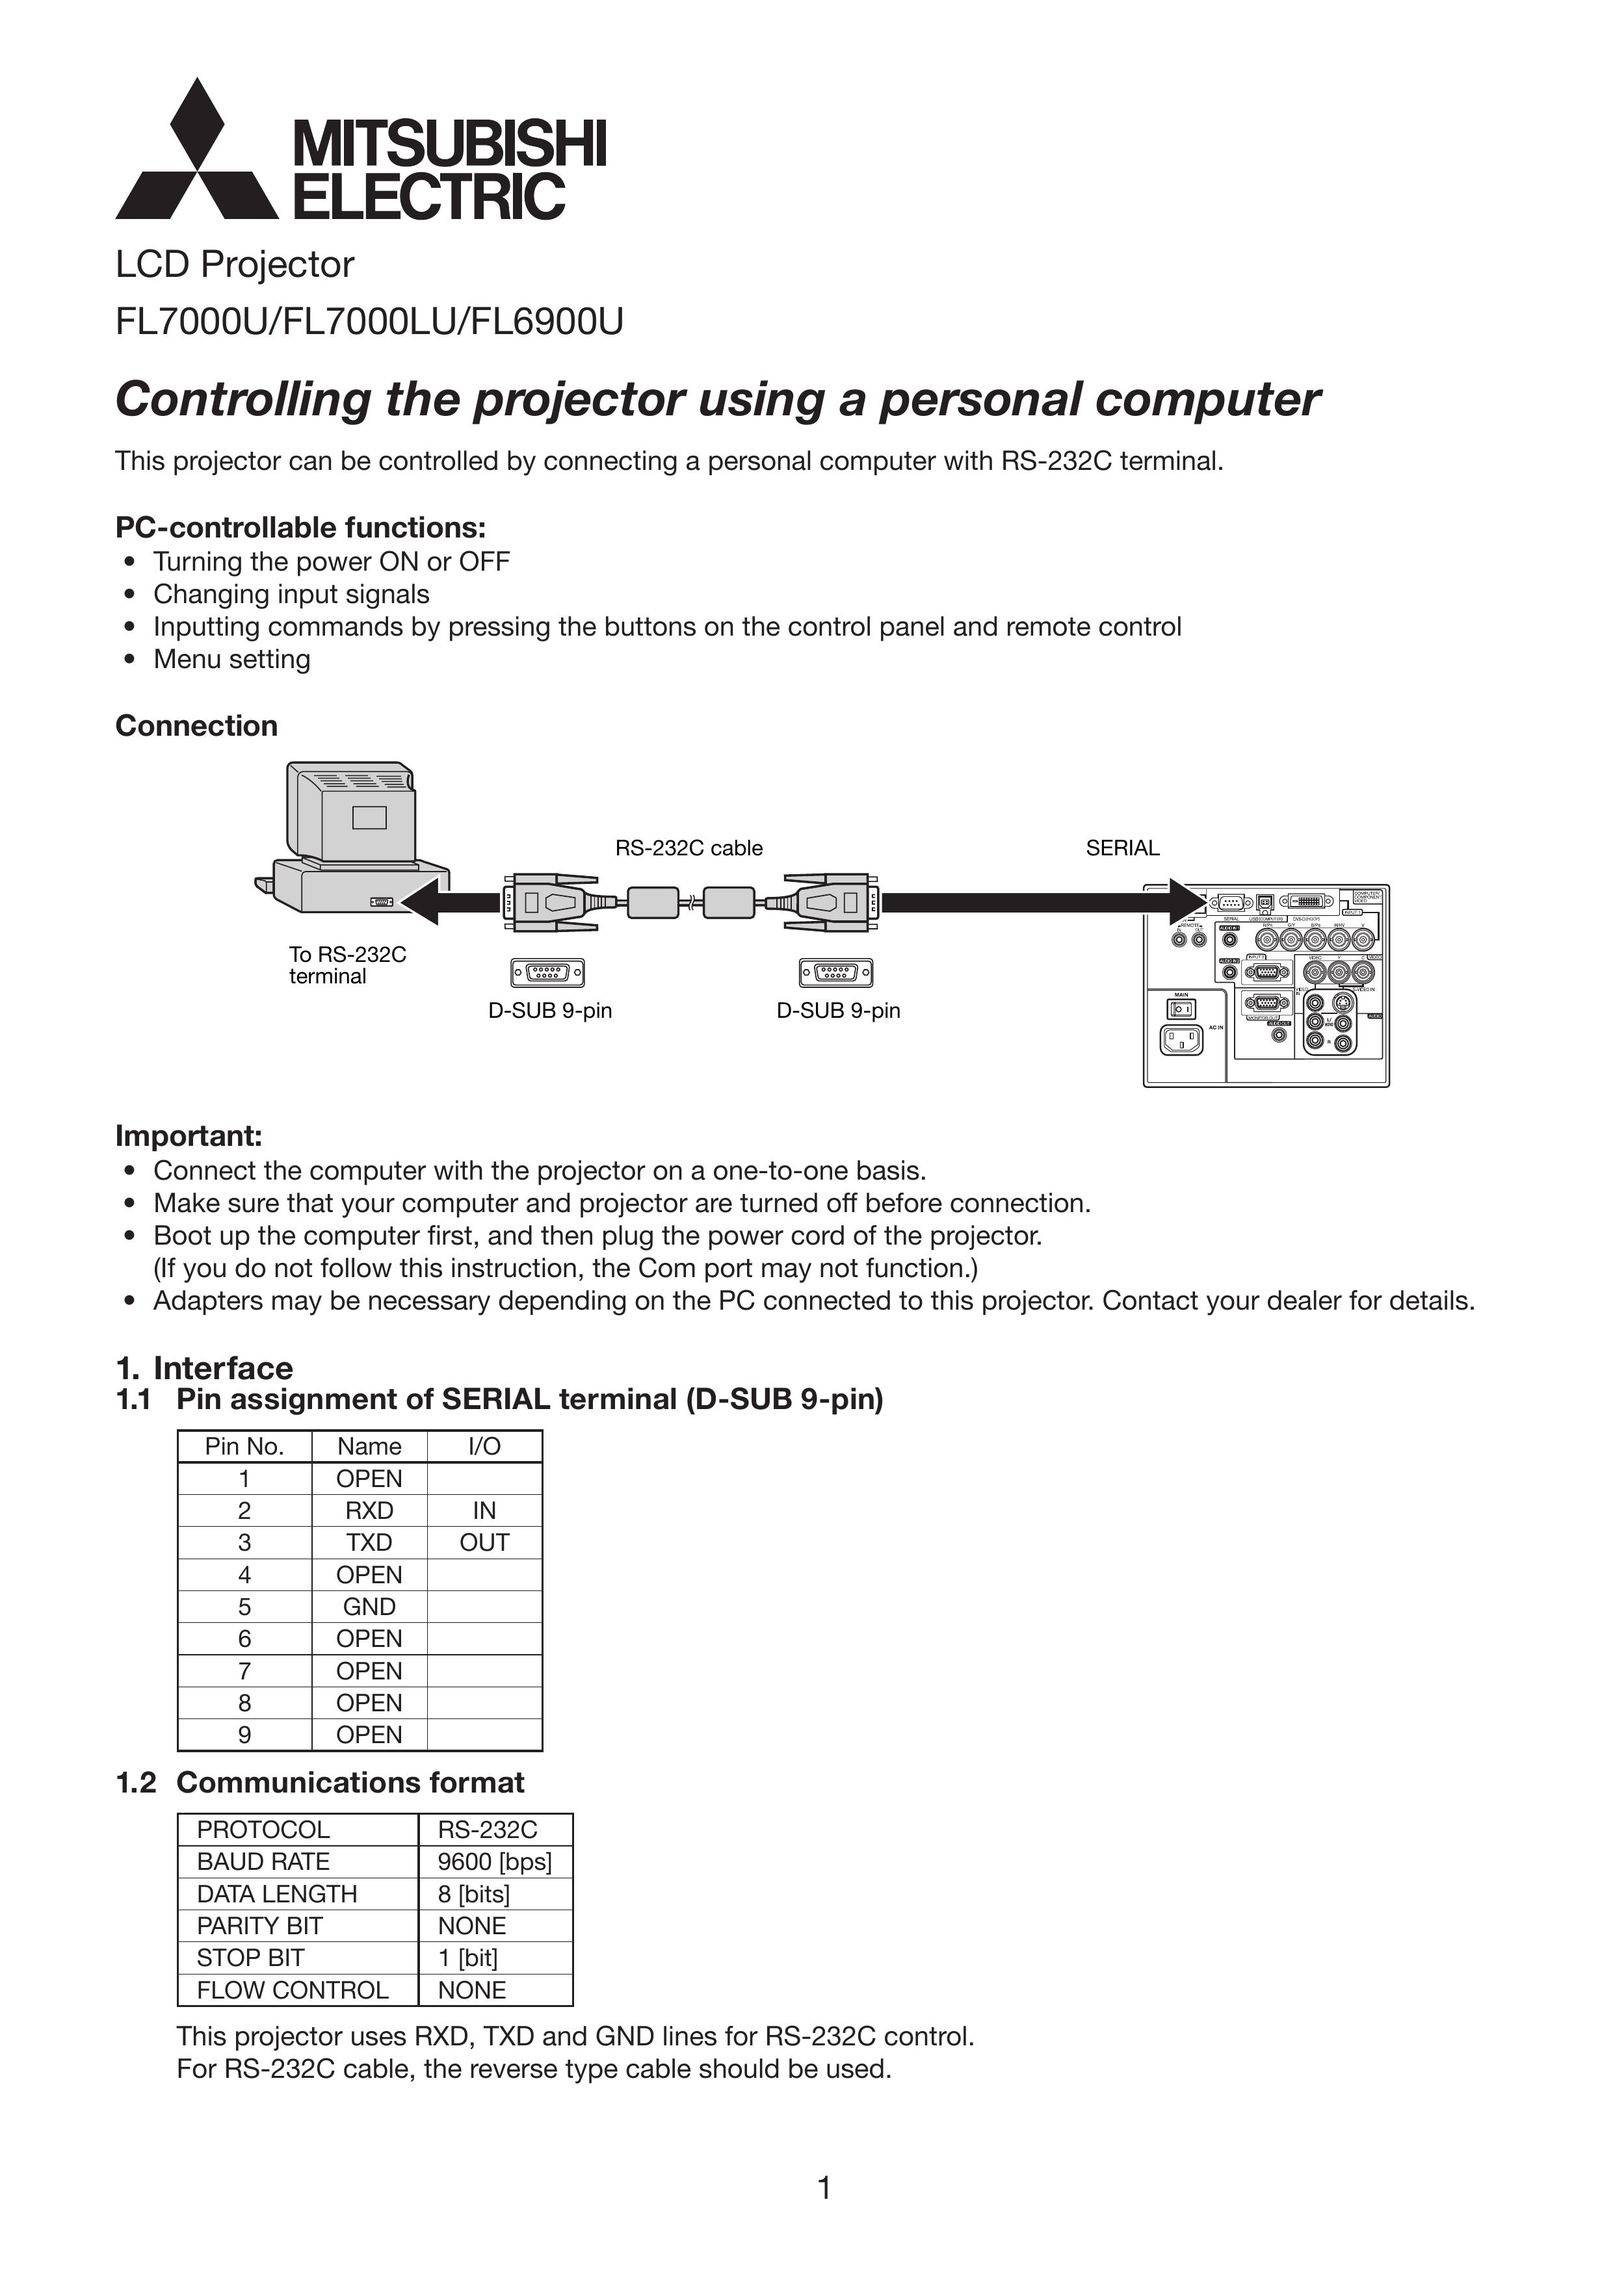 Mitsubishi Electronics FL6900U Projector User Manual